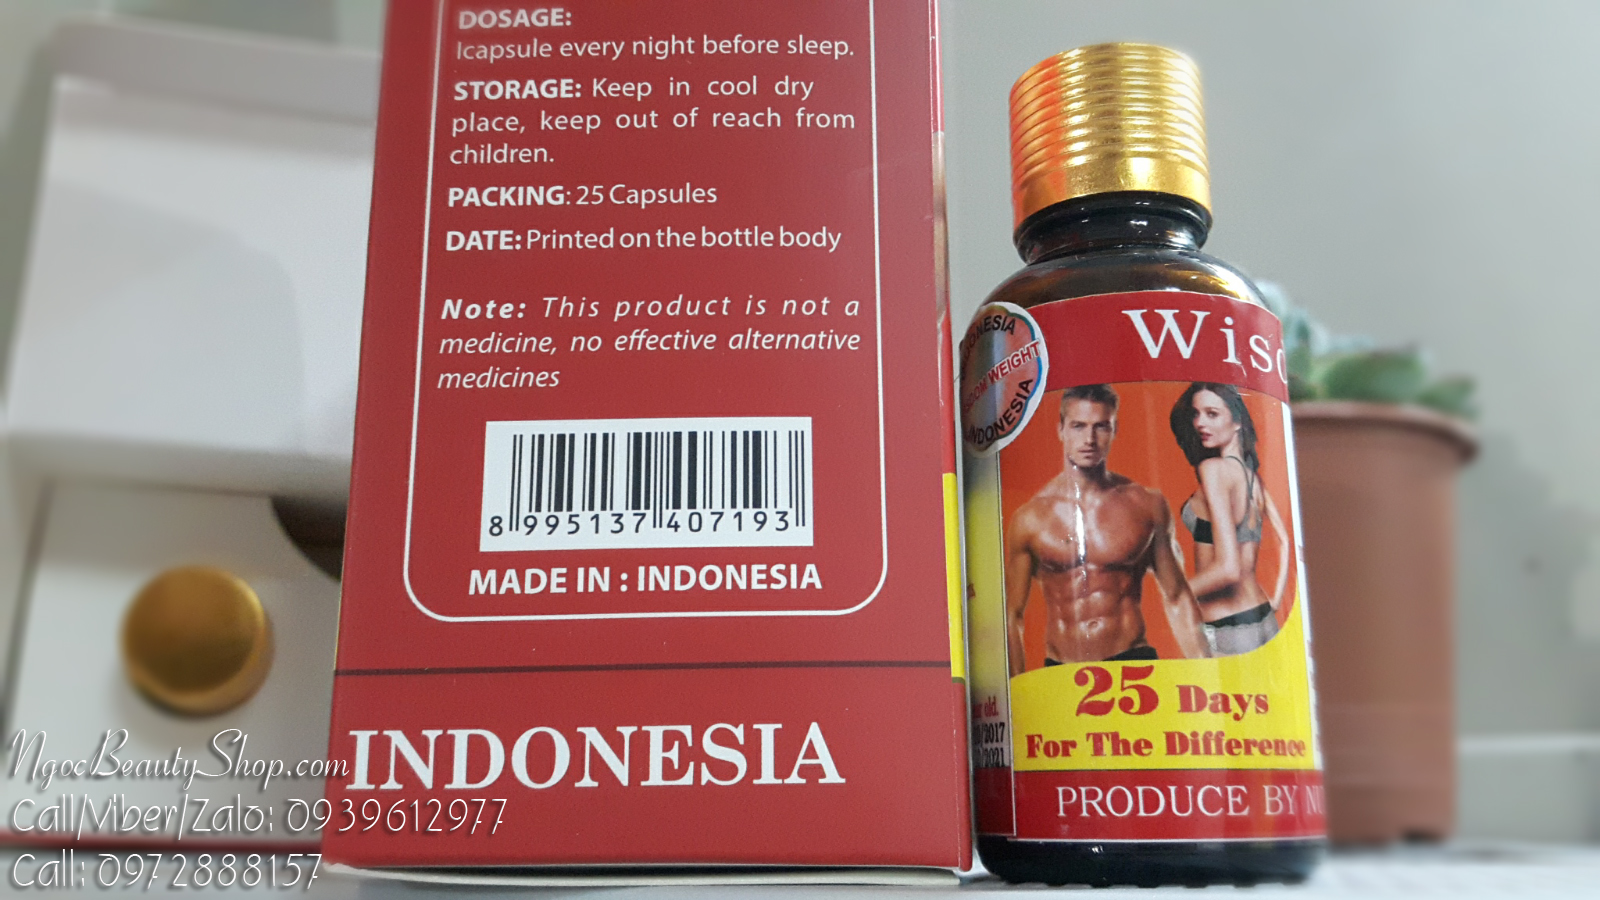 vitamin_tang_can_wisdom_weight_indonesia_ngocbeautyshop.com_0939612977_7